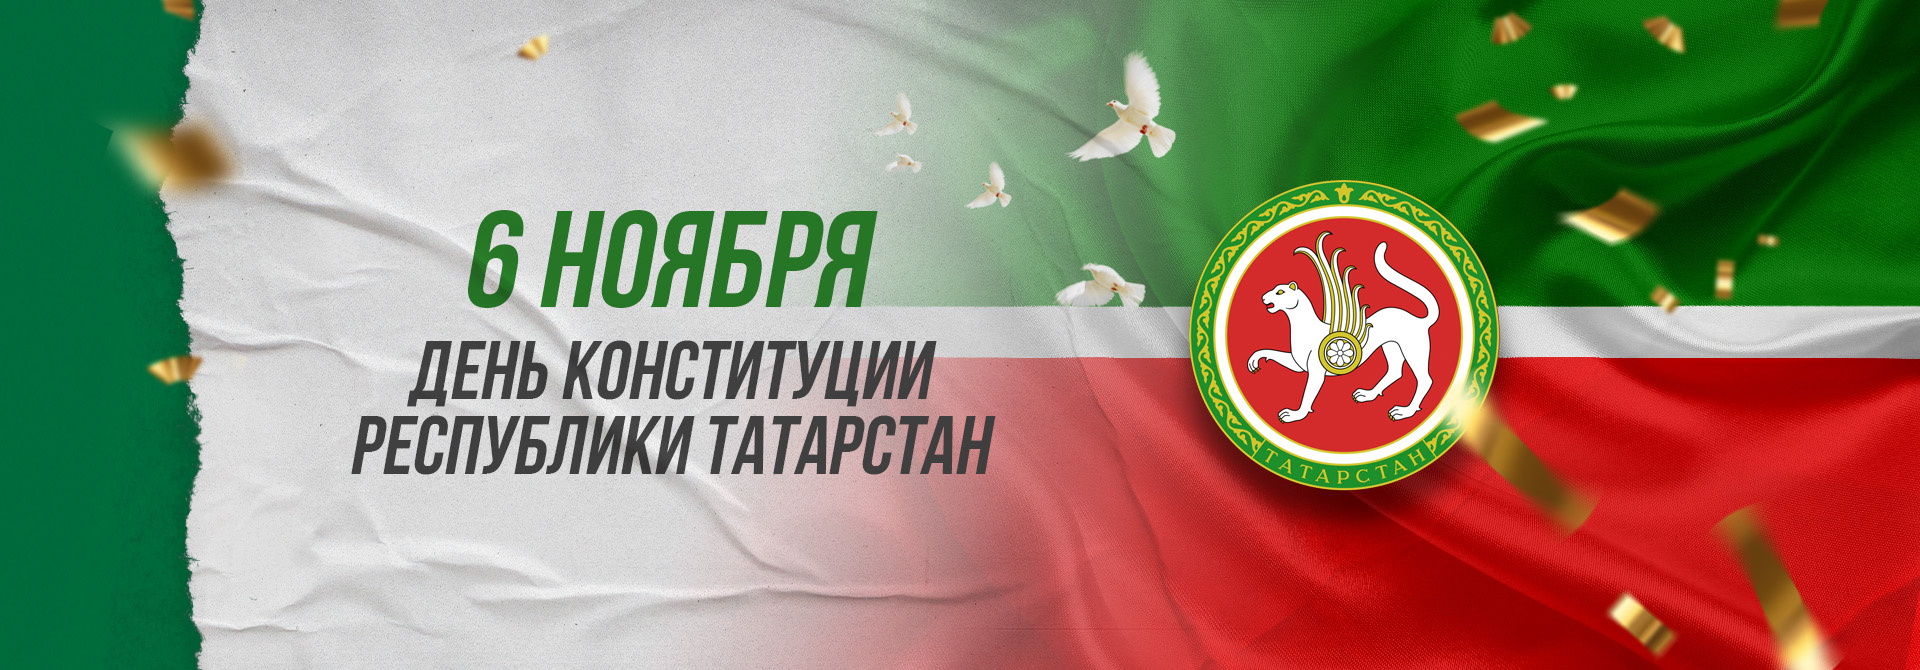 С Днем Конституции Республики Татарстан!